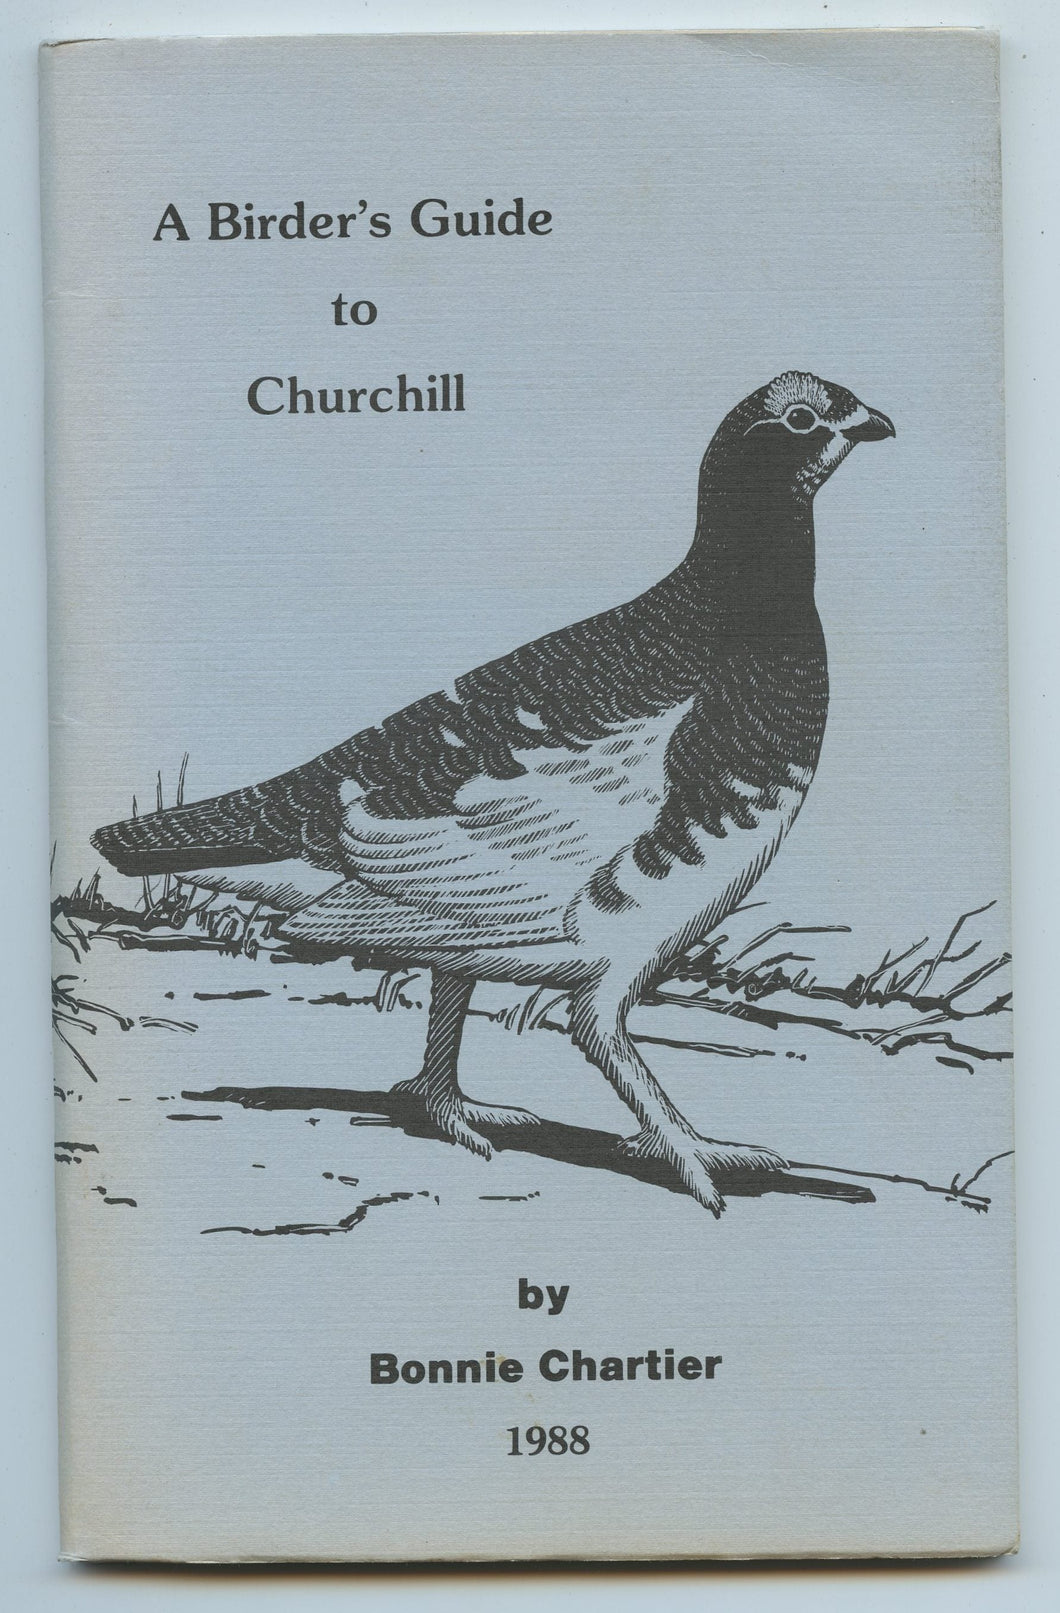 A Birder's Guide to Churchill